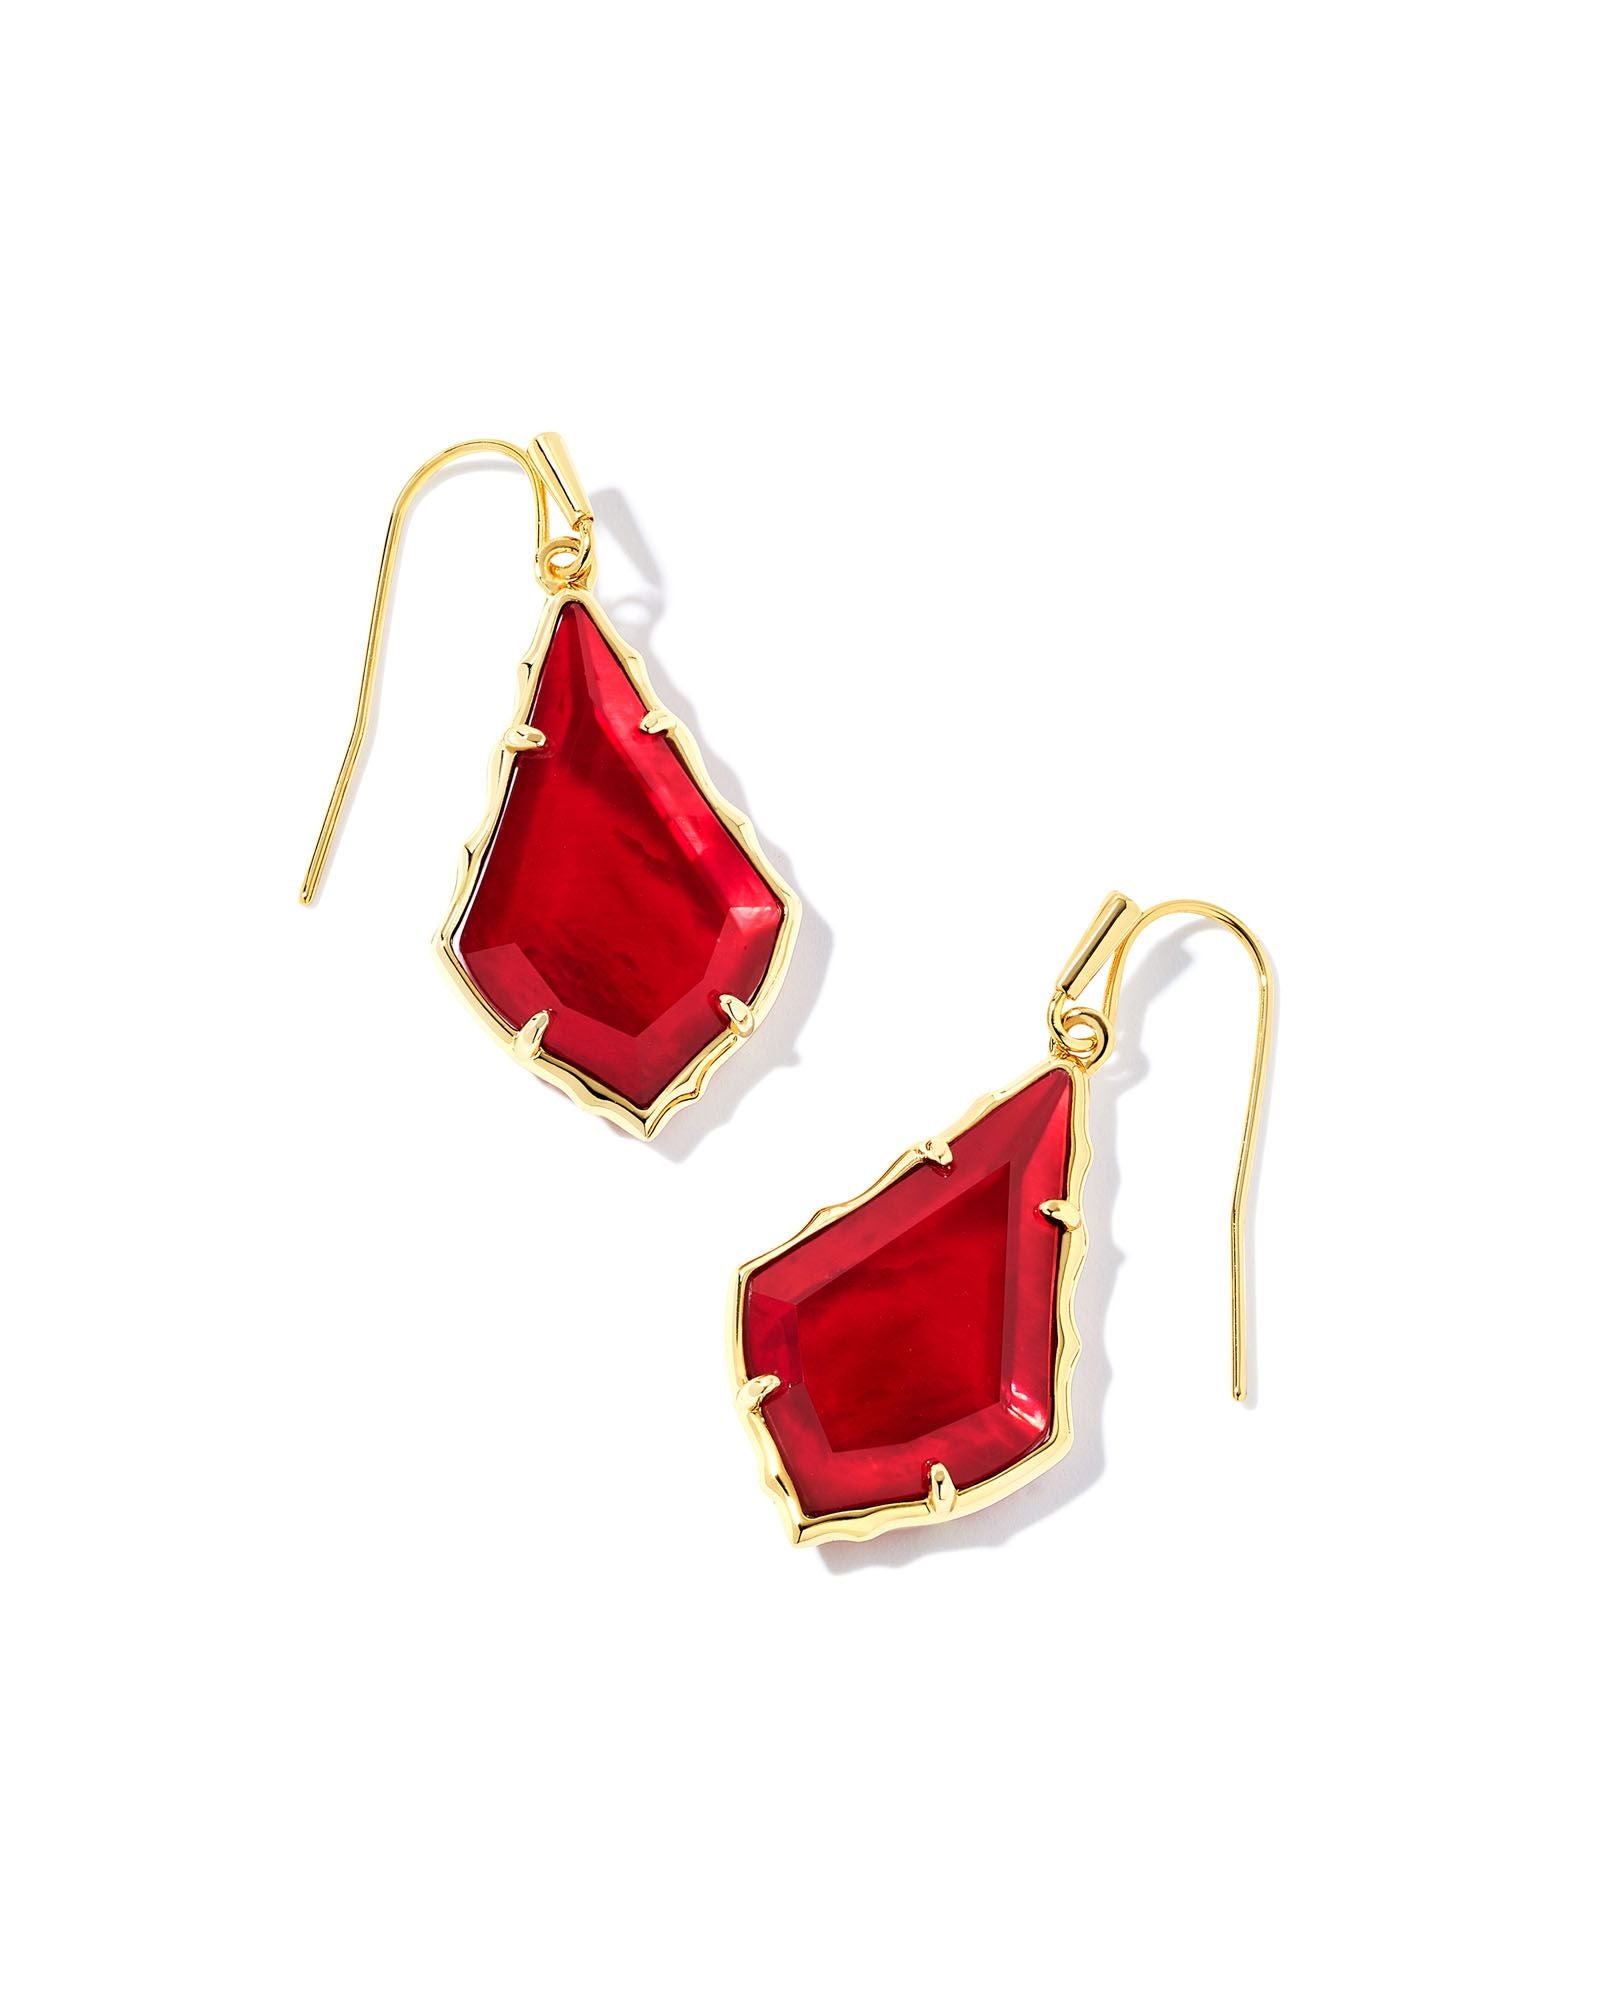 Kendra Scott drop earrings in gold cranberry illusion